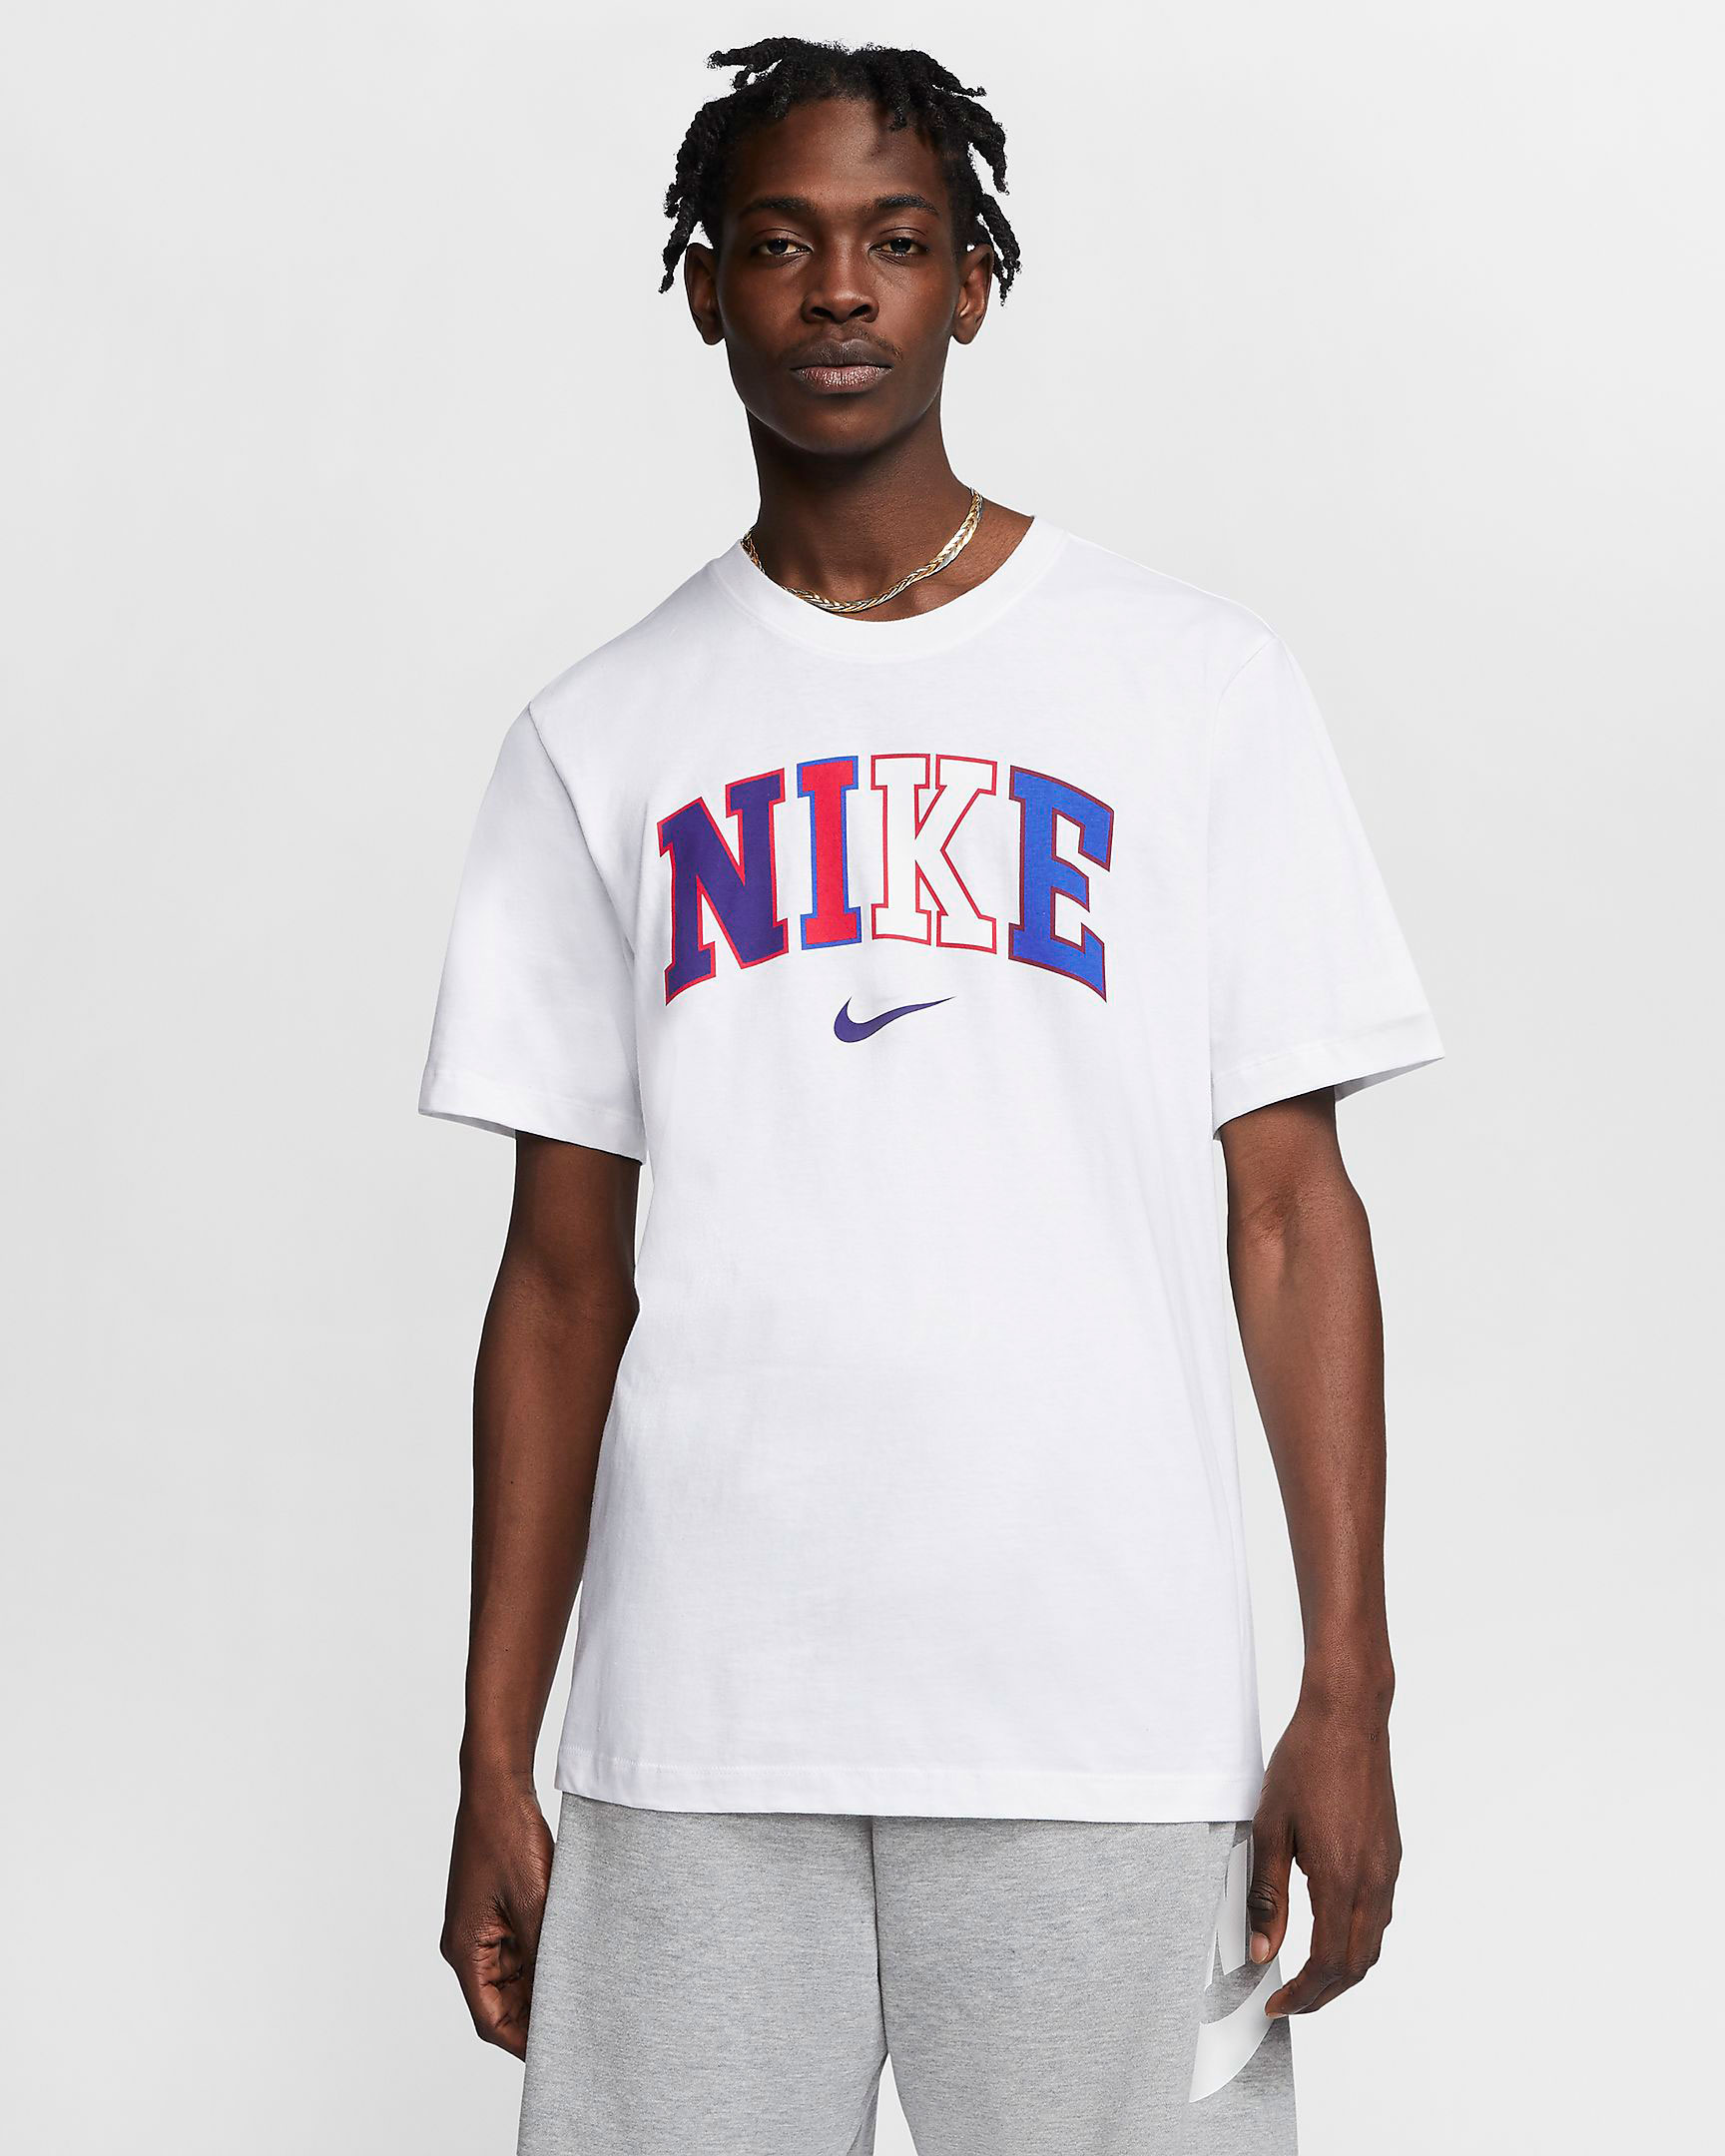 Nike Kyrie 6 USA Clothing Match | SneakerFits.com